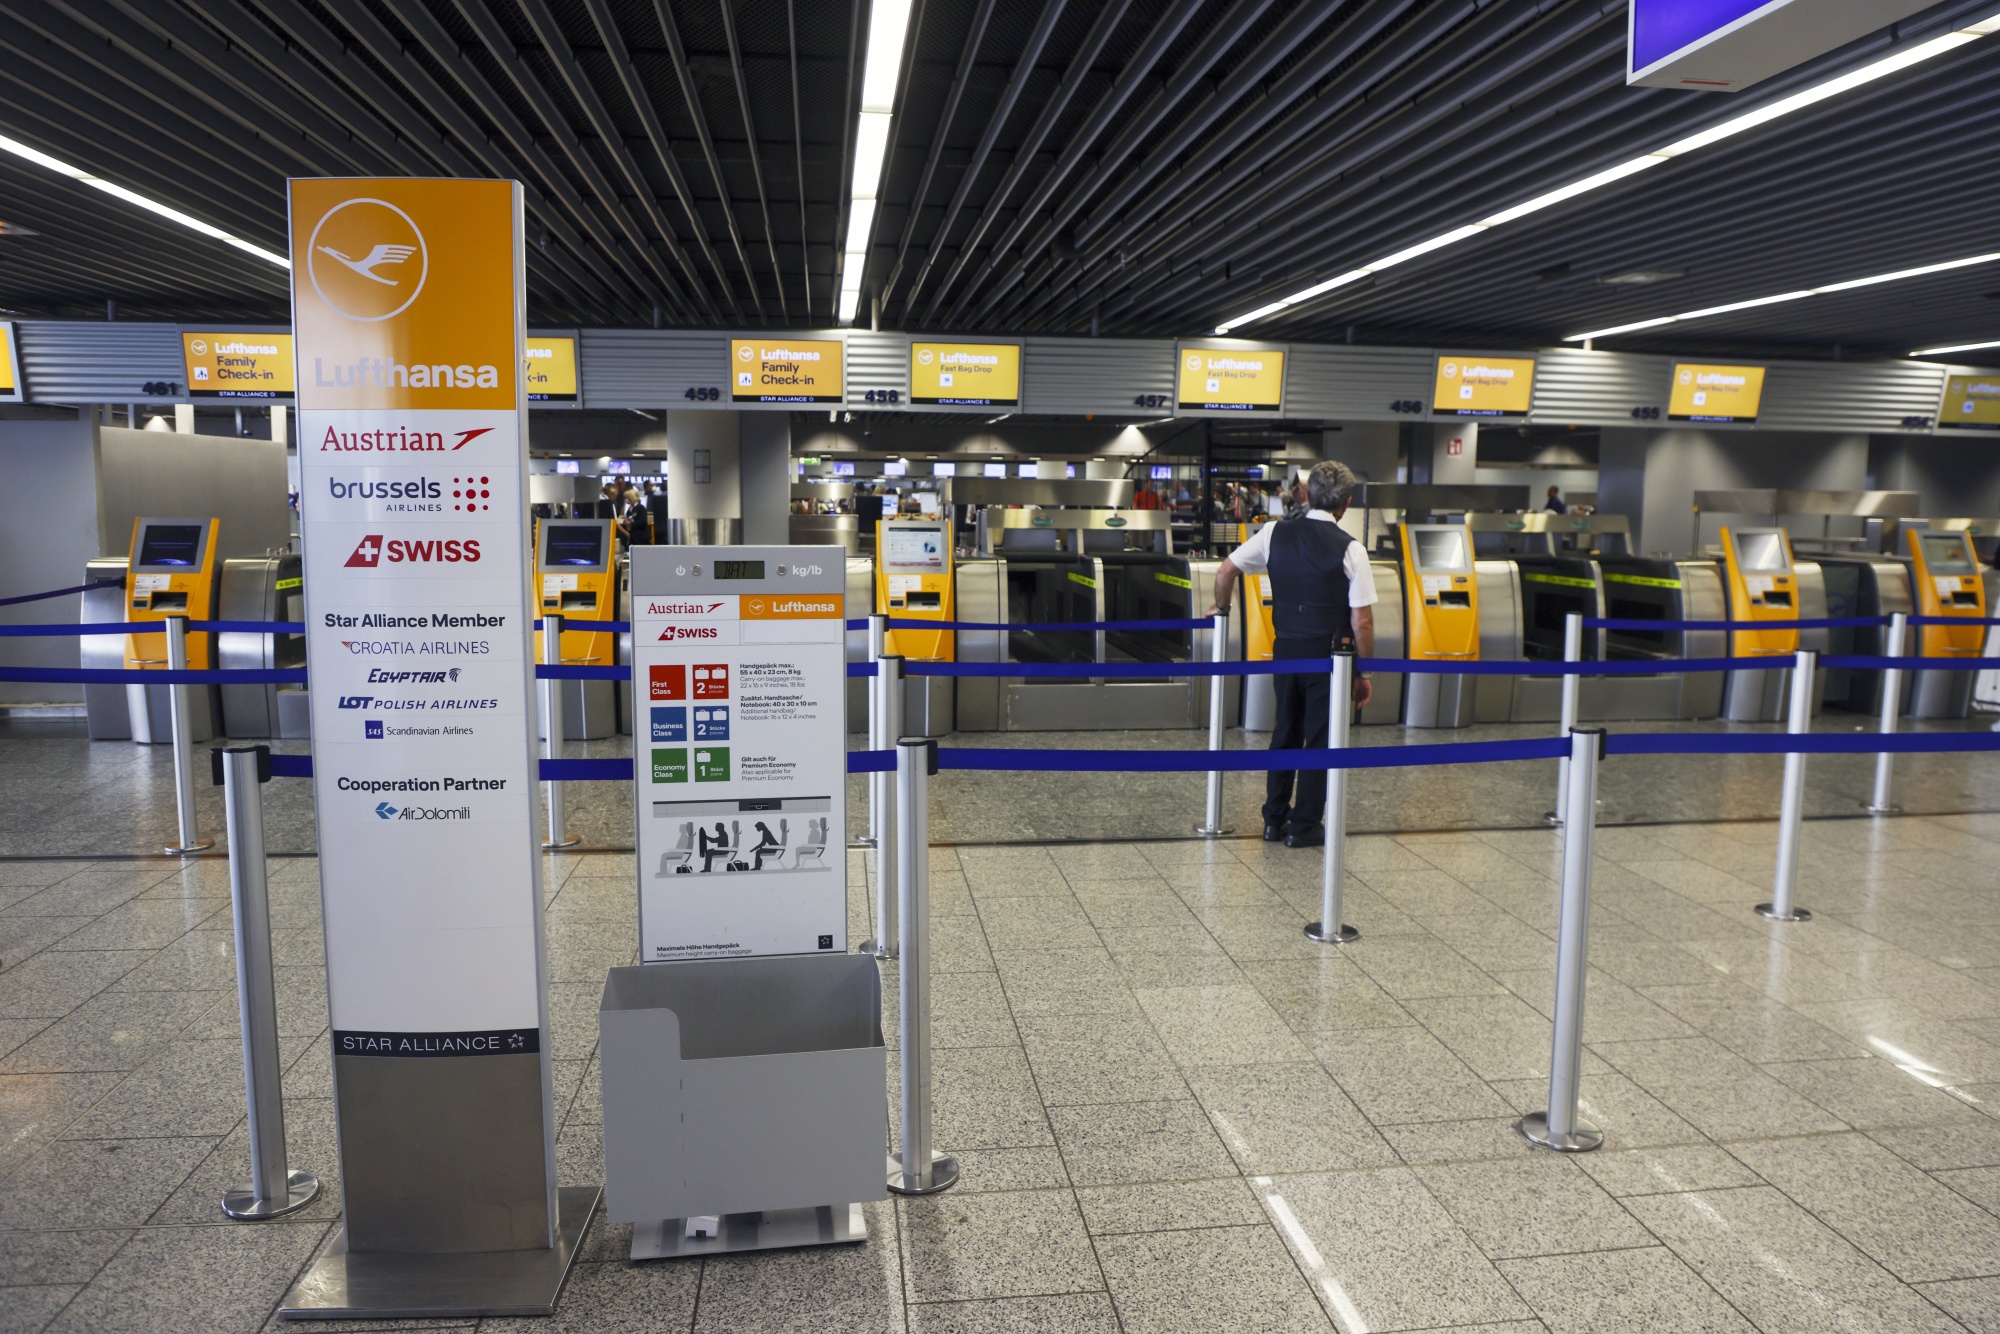 LOT Polish Airlines CDG Terminal - Paris Charles de Gaulle Airport